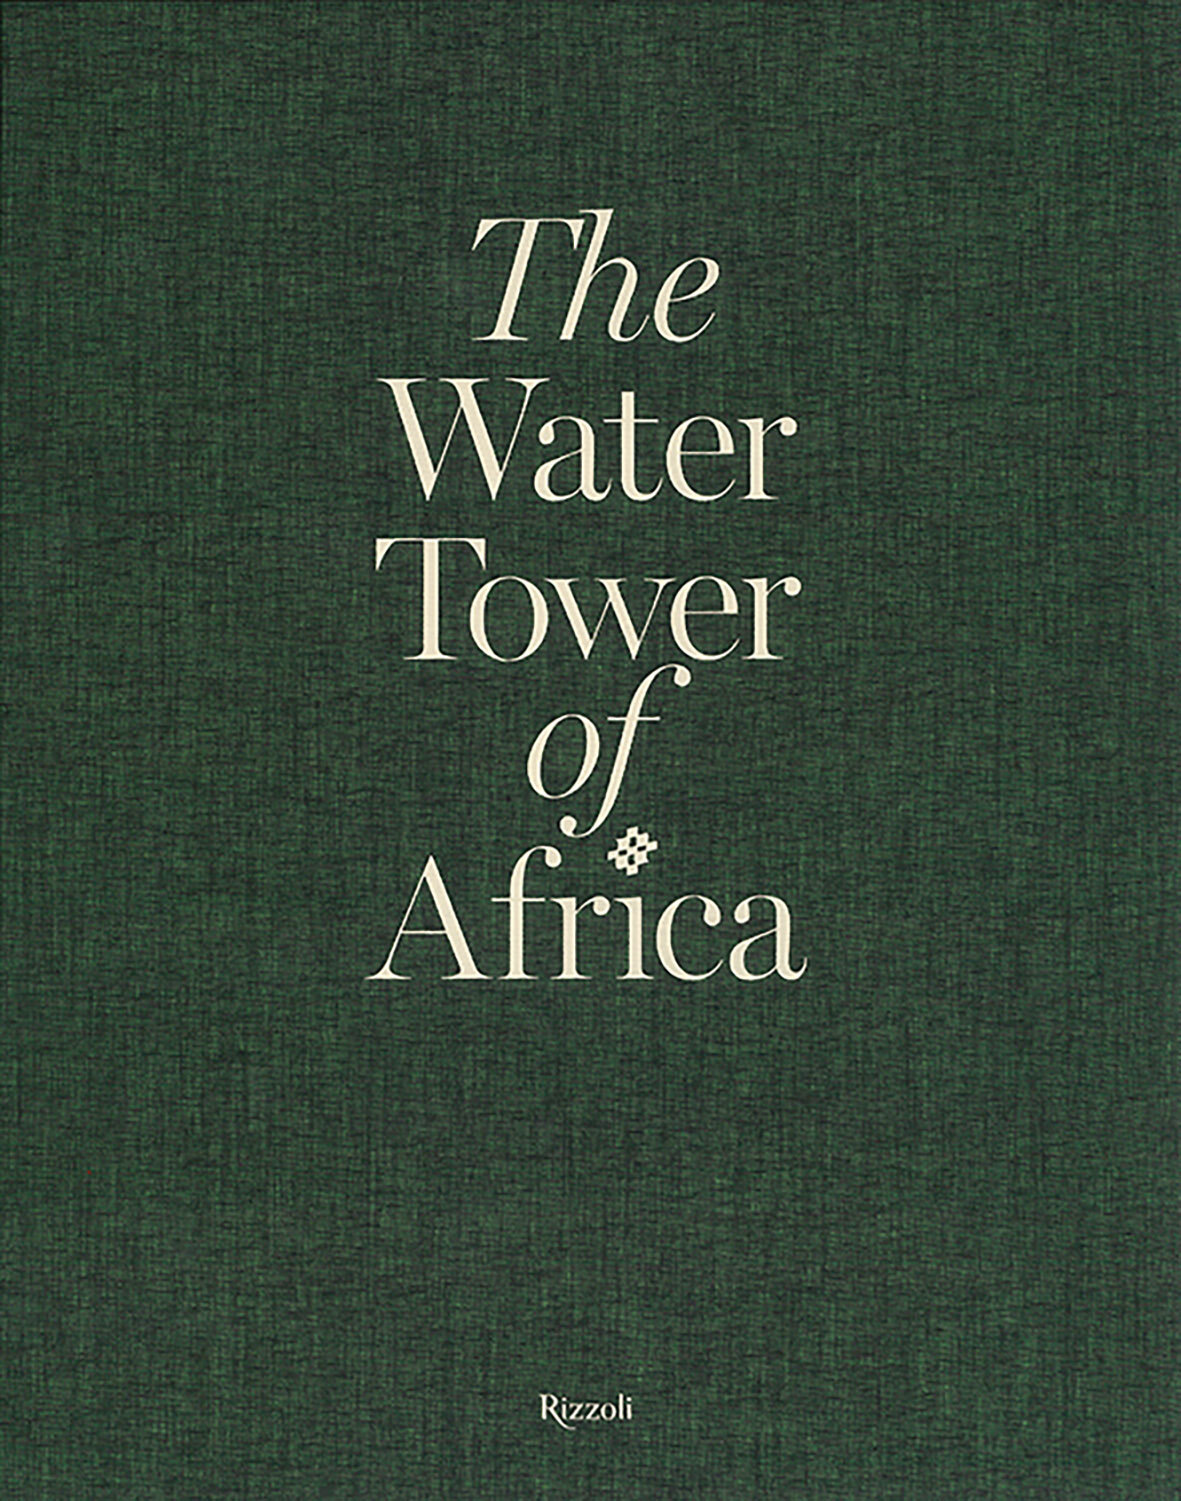 The Water Towe of Africa.jpg